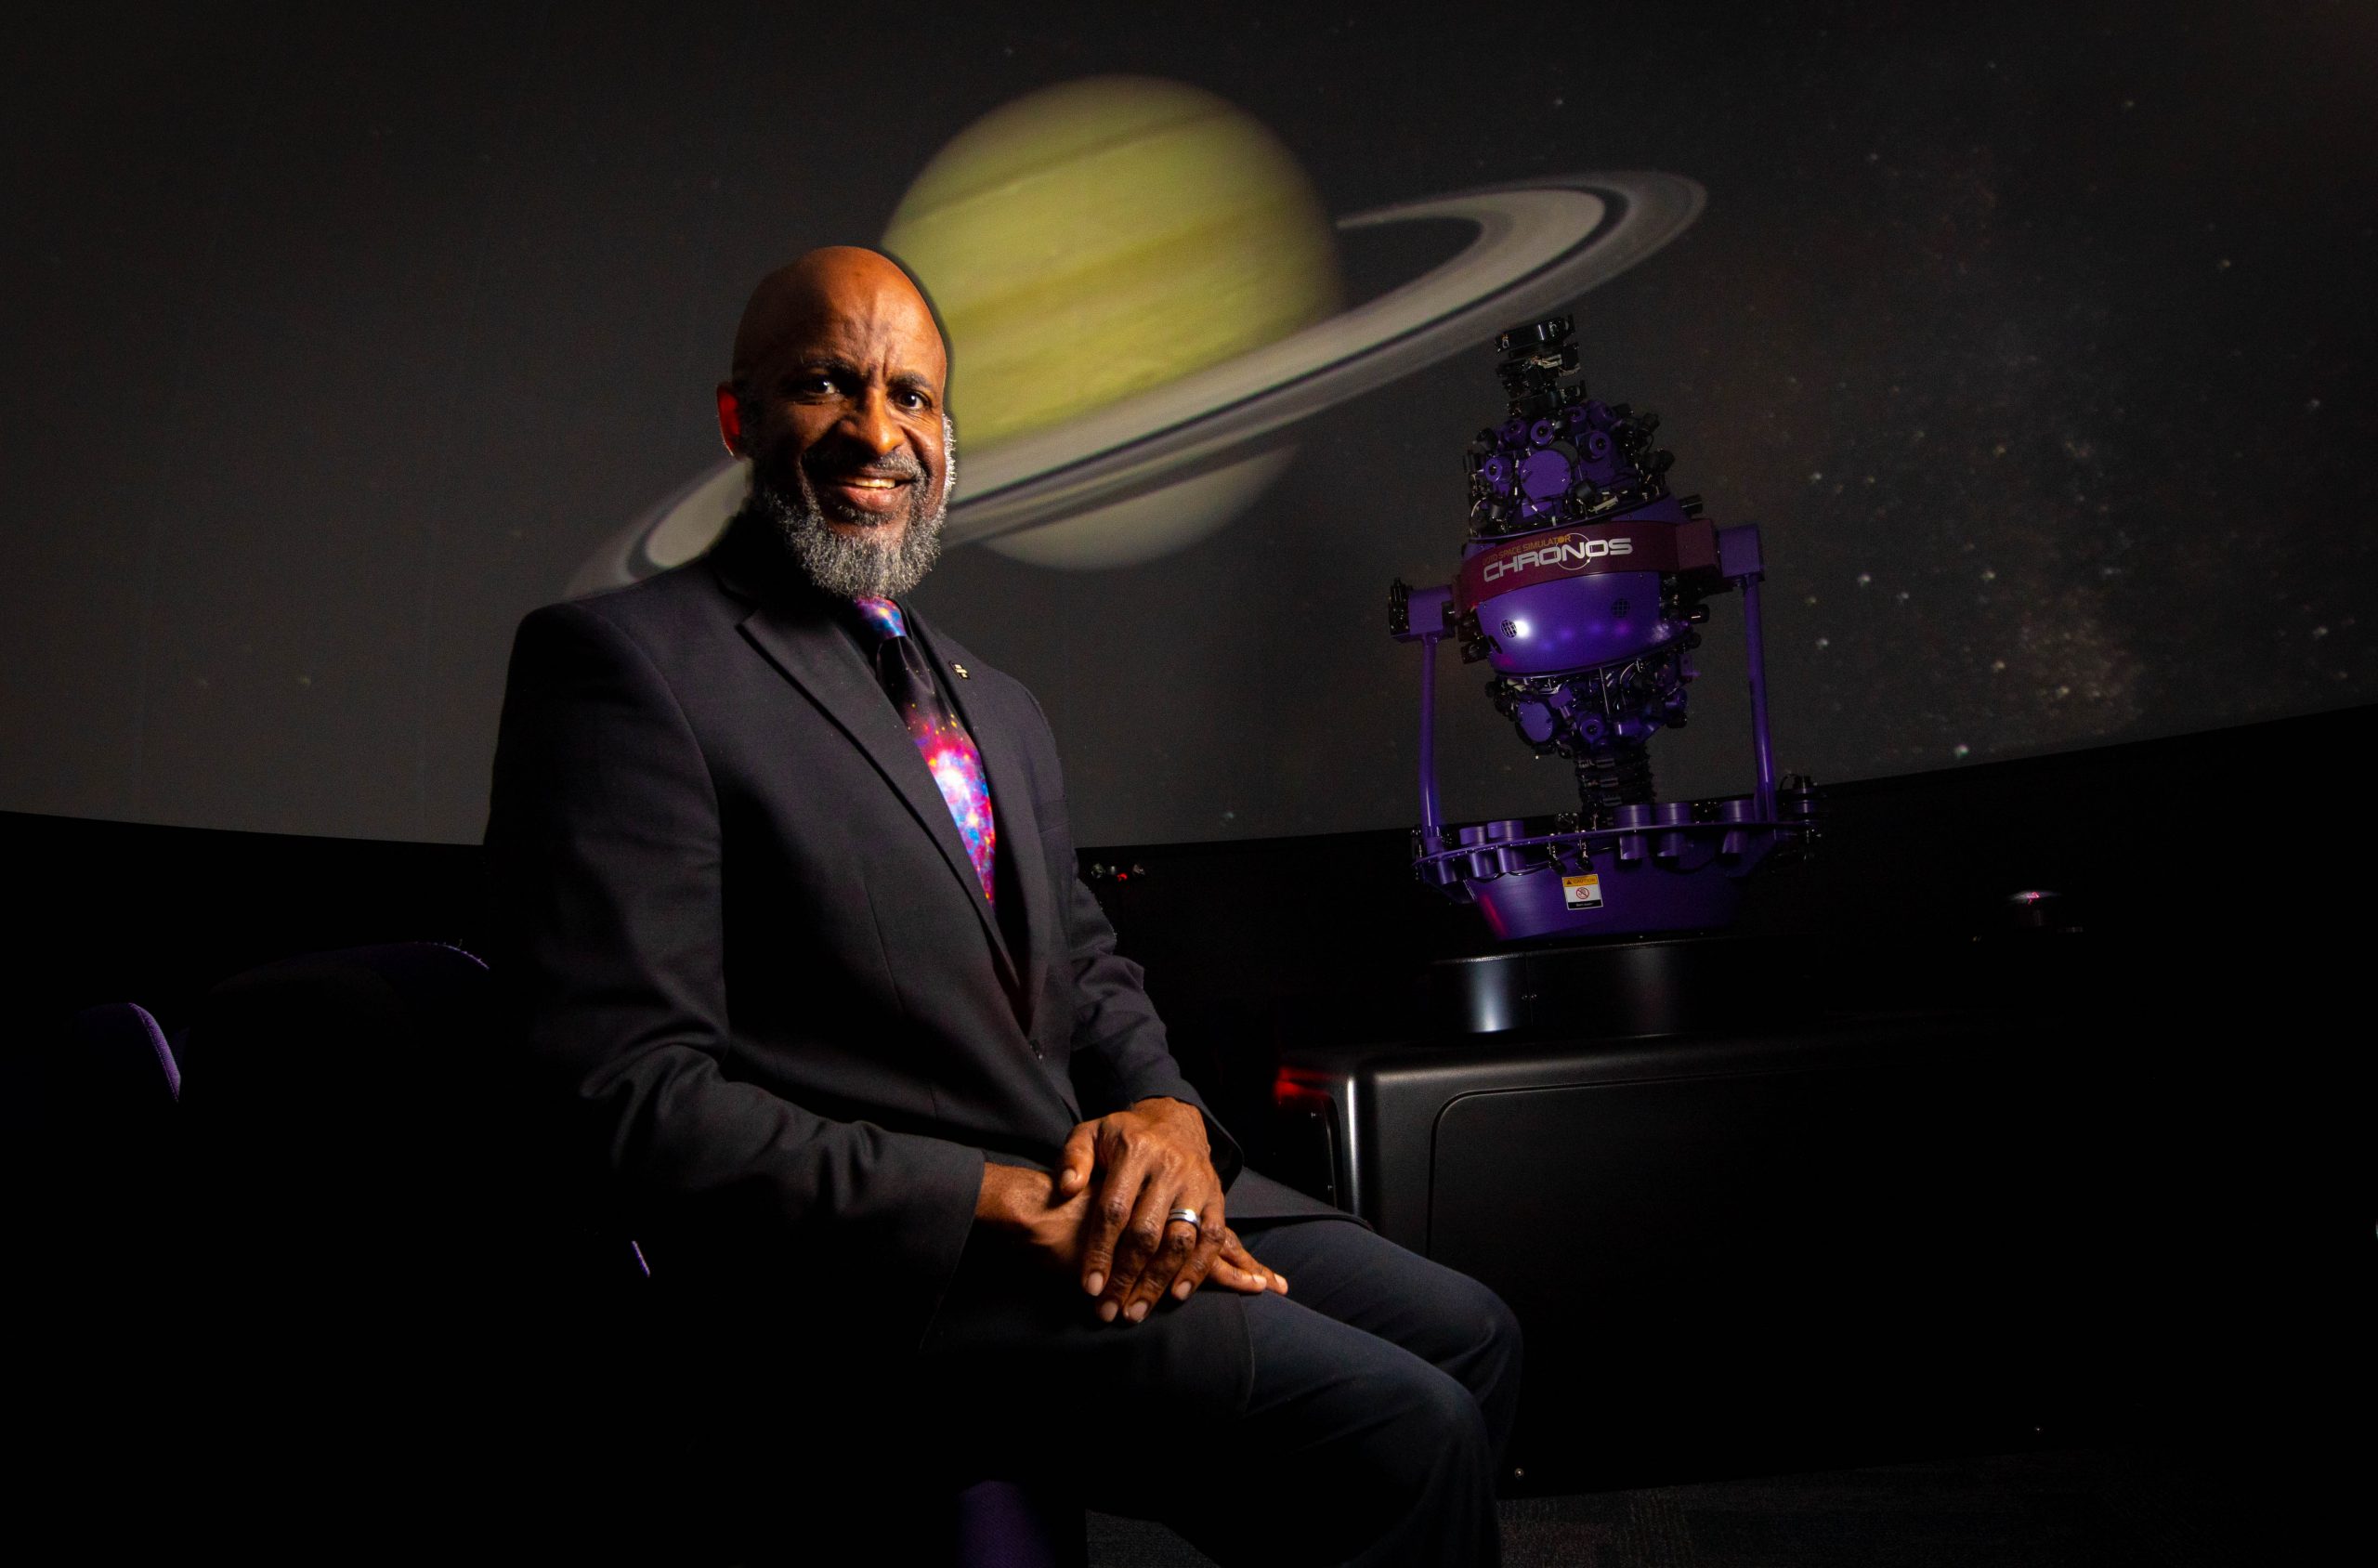 Santa Fe College Kika Silva Pla Planetarium director James C. Albury sits in front of the Chronos on Feb. 21, 2023 in Gainesville.